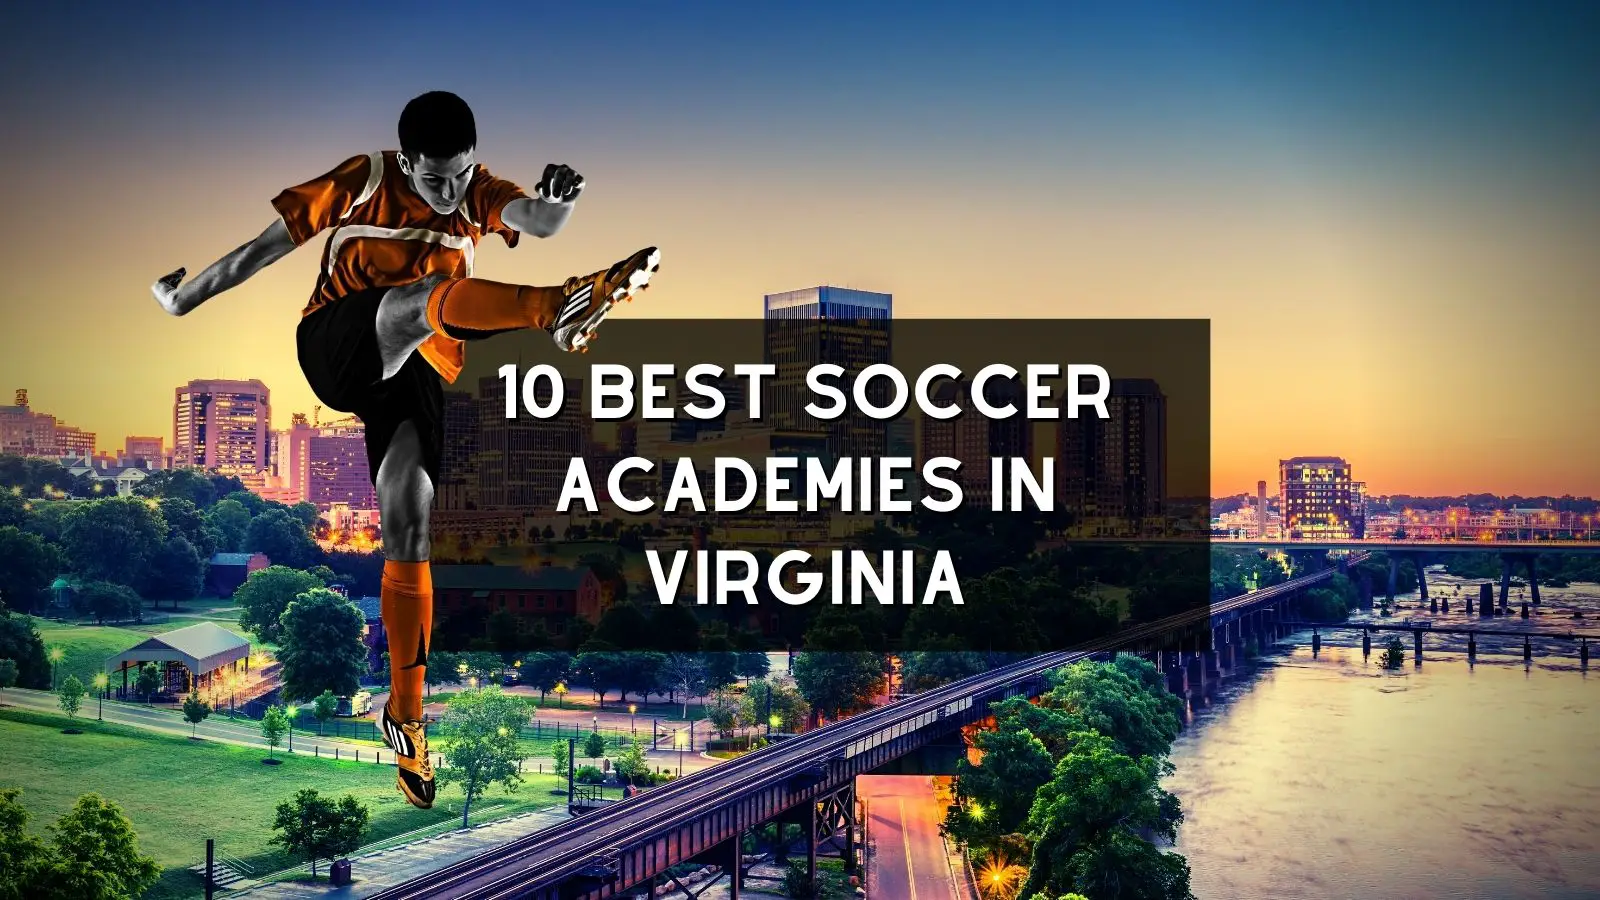 The 10 Best Soccer Academies In Virginia